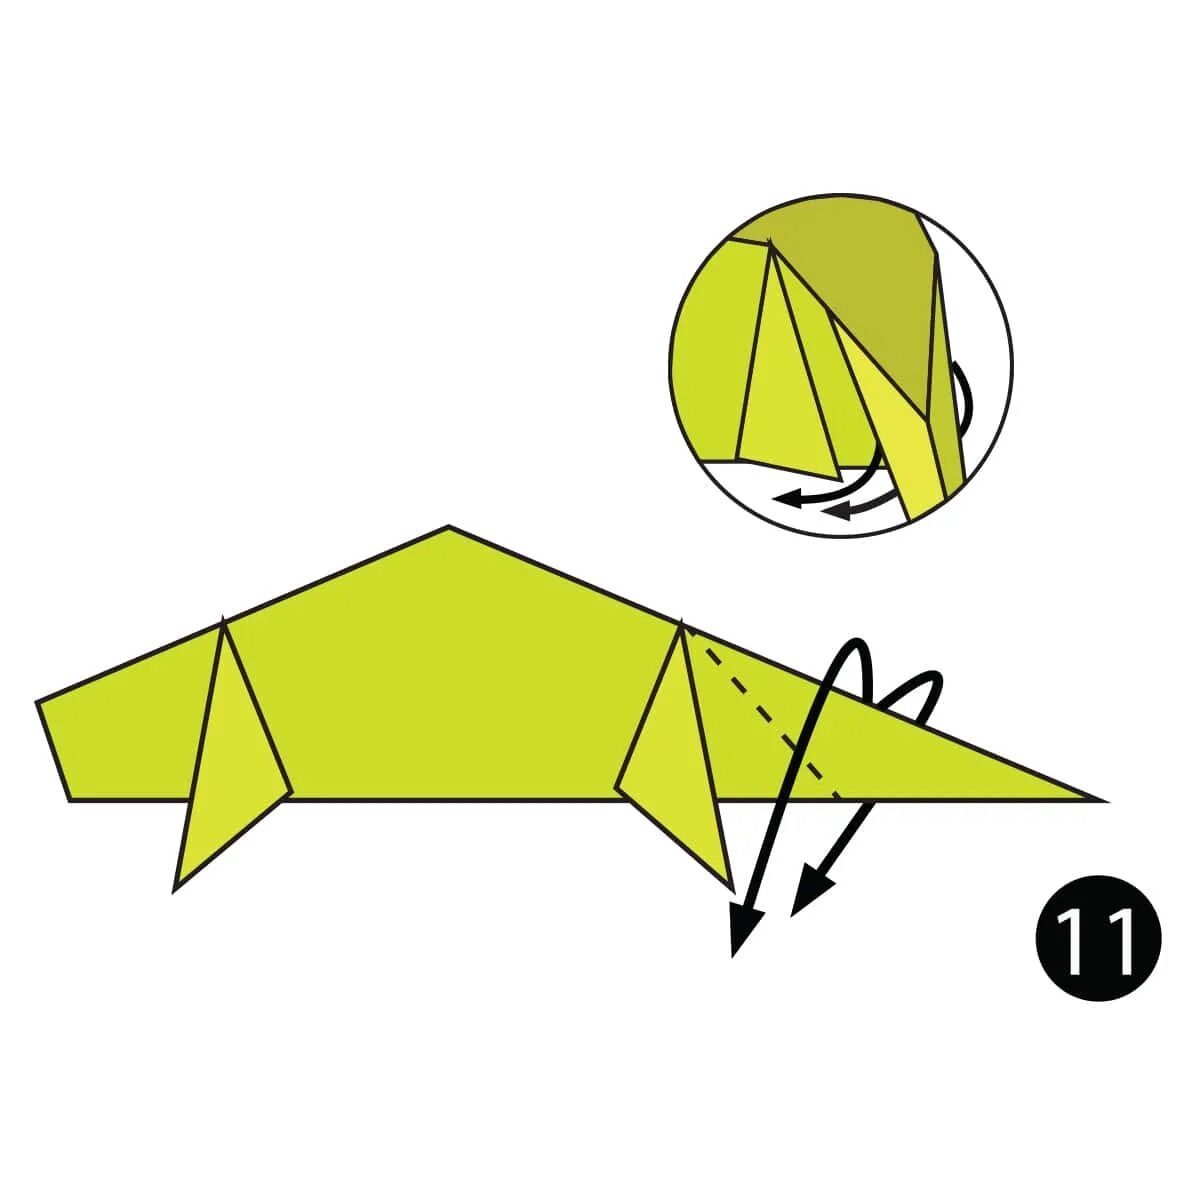 Хамелеон схема. Хамелеон оригами для детей. Поделка хамелеон из бумаги. Оригами хамелеон схема. Аппликация хамелеон из бумаги.